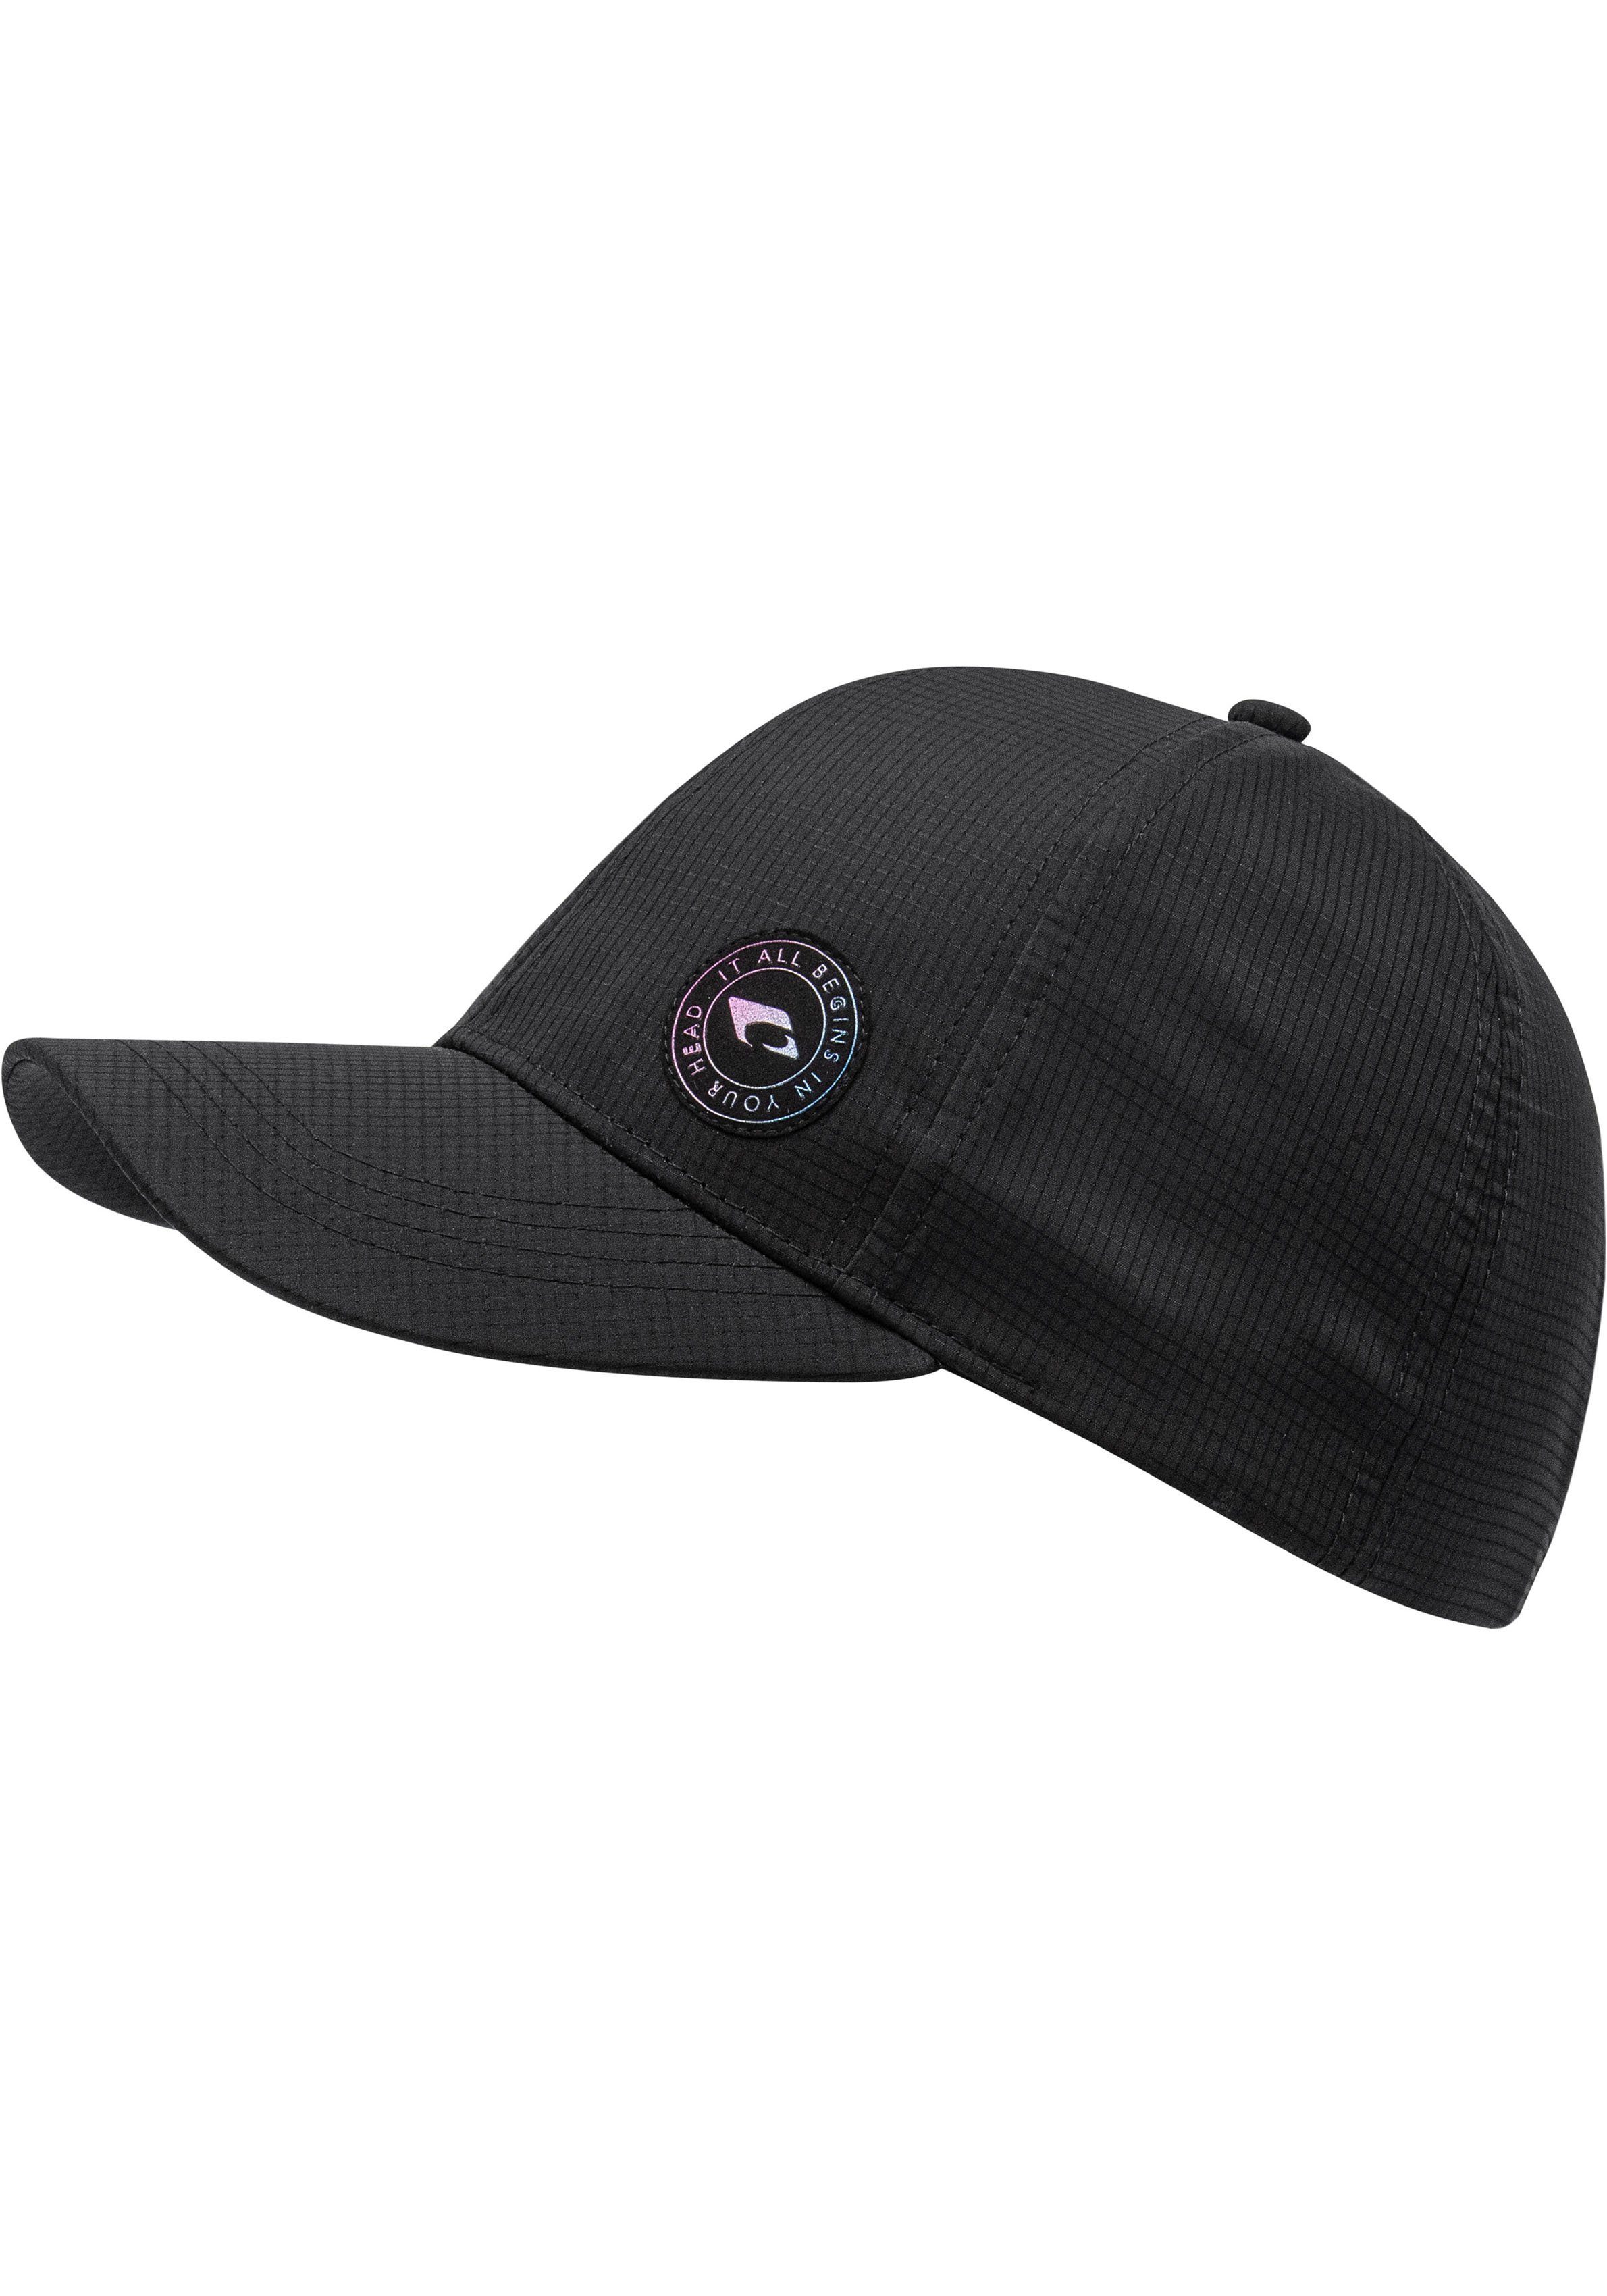 chillouts Baseball Cap Langley schwarz Hat